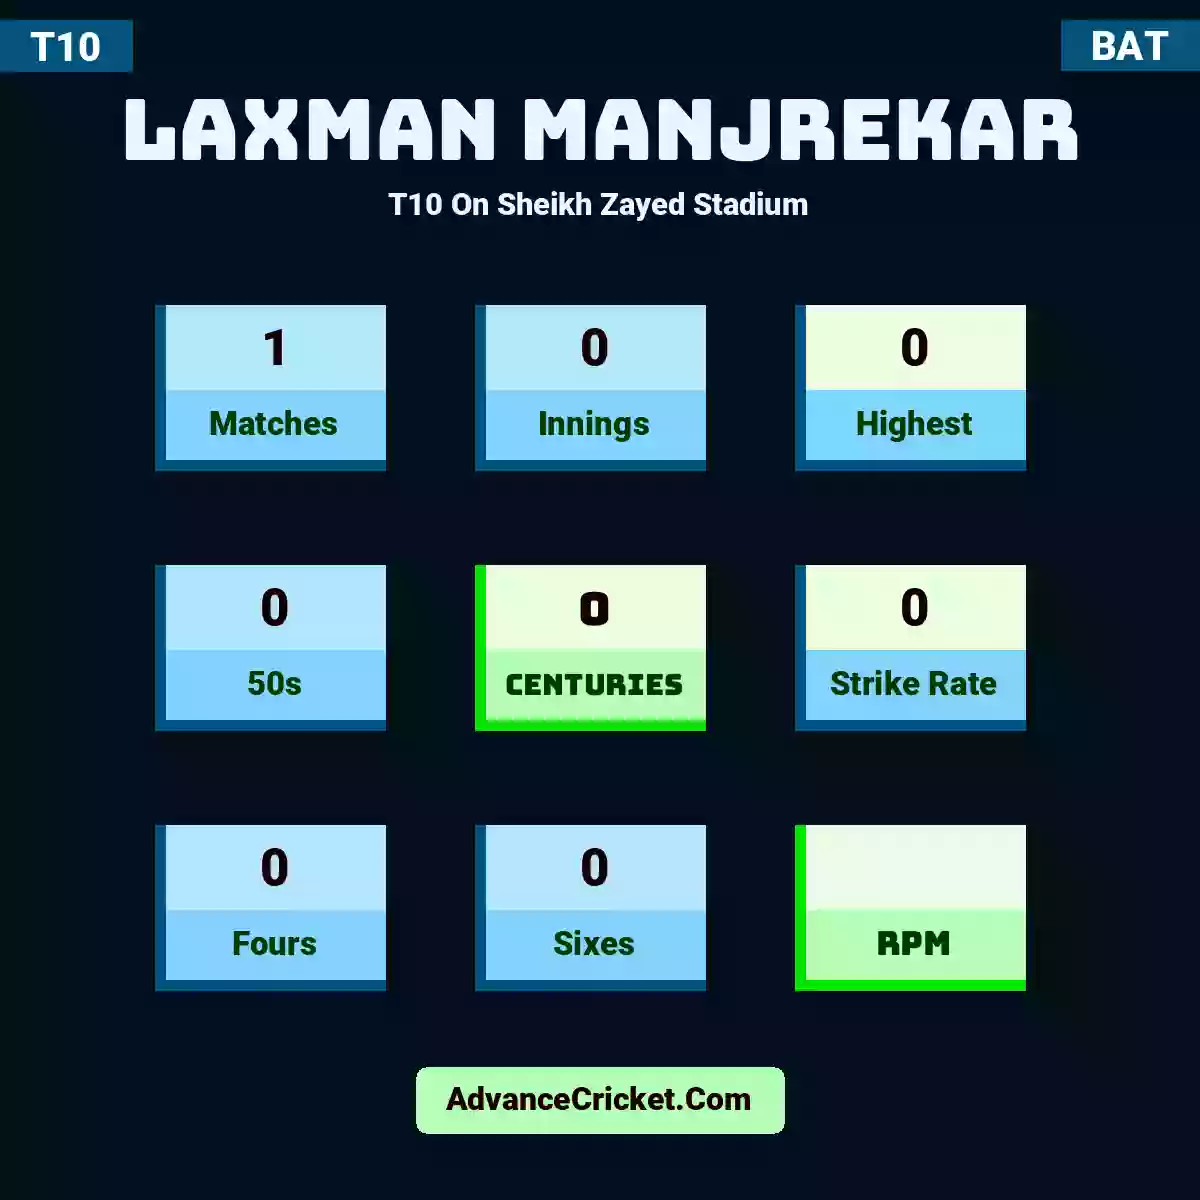 Laxman Manjrekar T10  On Sheikh Zayed Stadium, Laxman Manjrekar played 1 matches, scored 0 runs as highest, 0 half-centuries, and 0 centuries, with a strike rate of 0. L.Manjrekar hit 0 fours and 0 sixes.